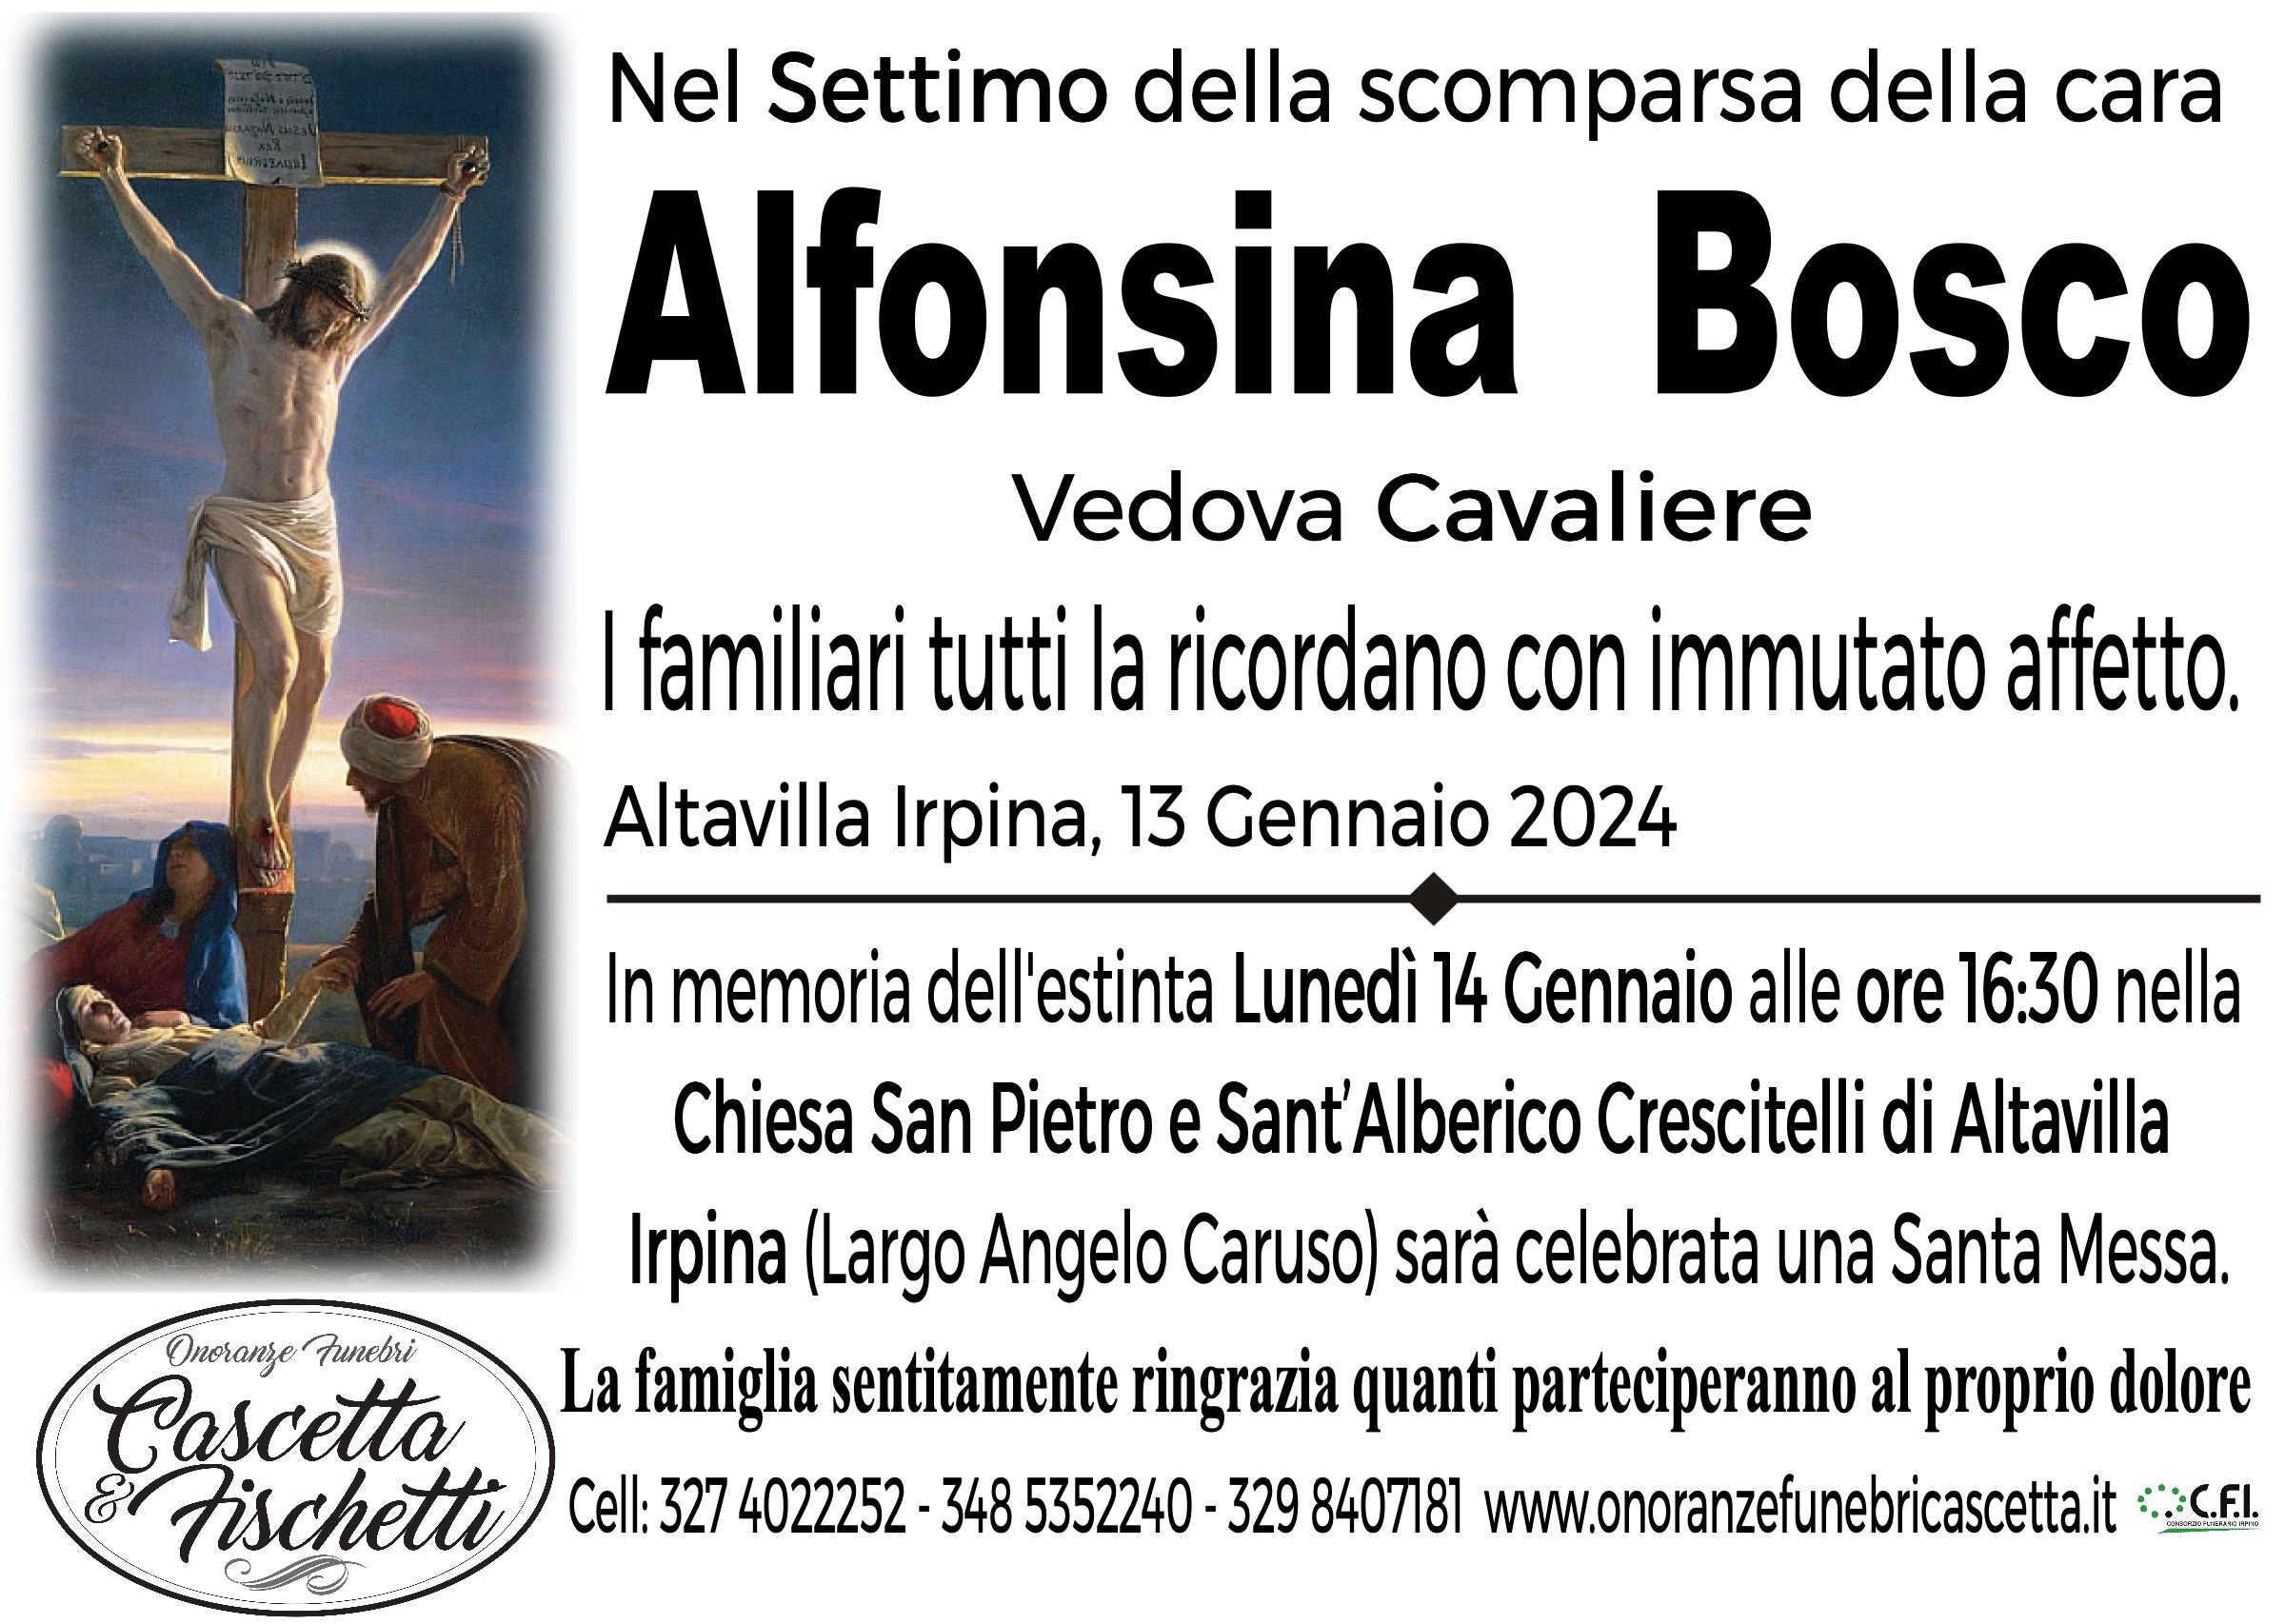 Alfonsina Bosco